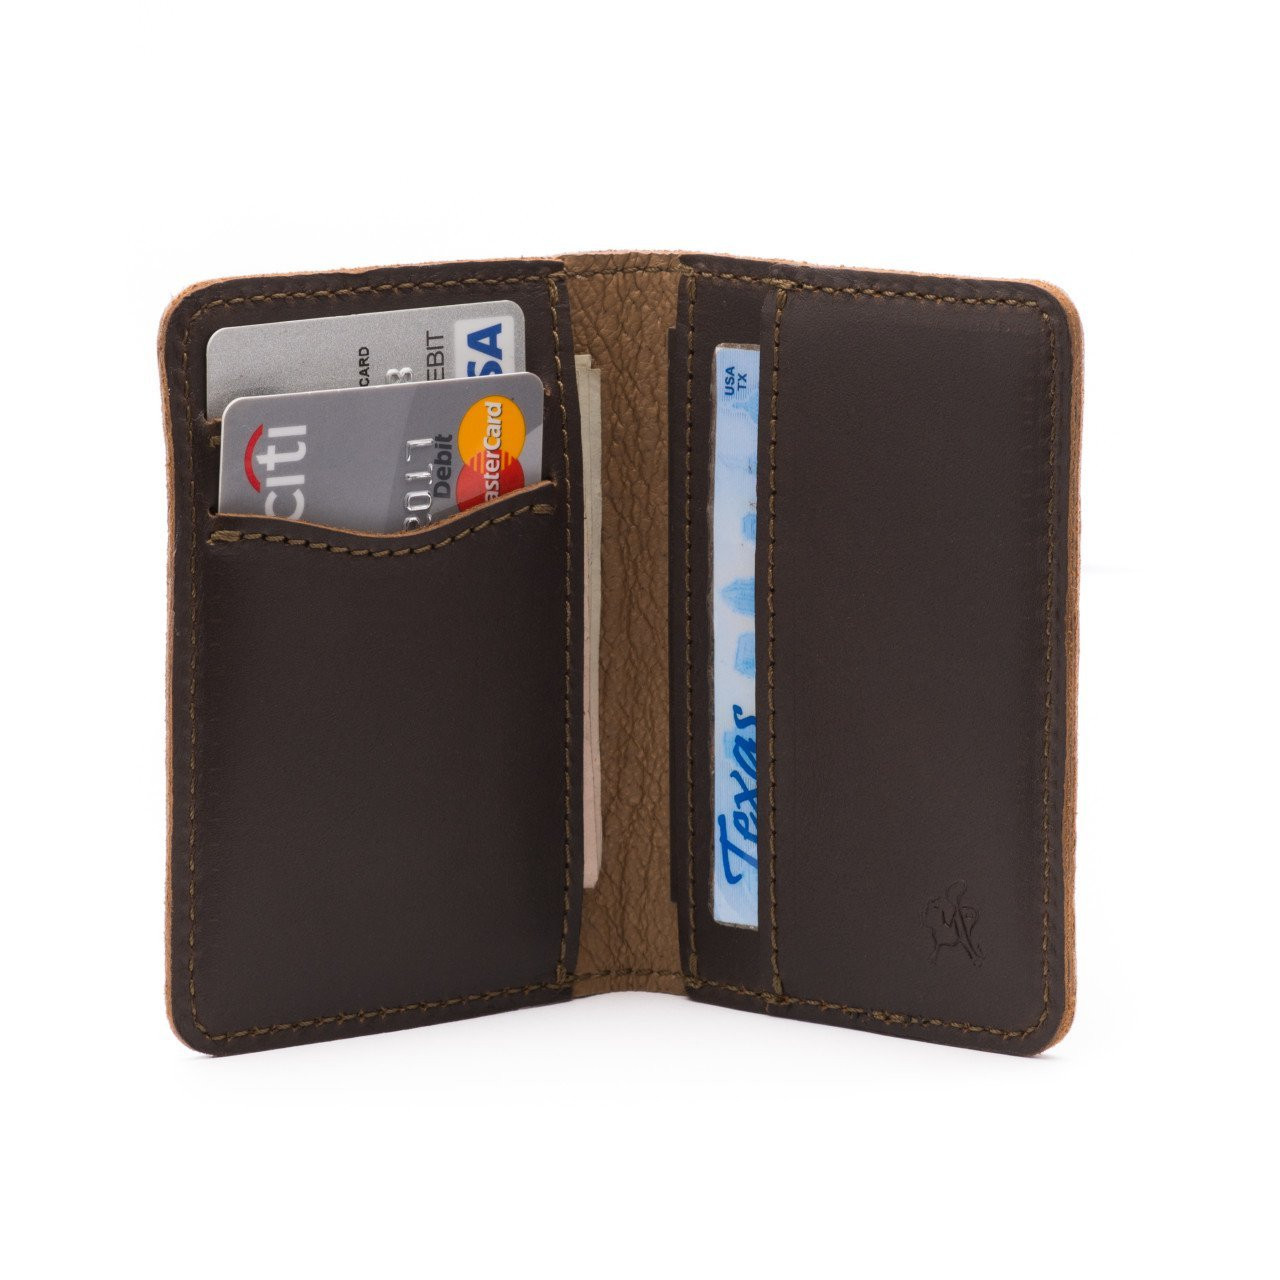 Leather Wallet for Slim Card Wallet for Minimalists | Saddleback